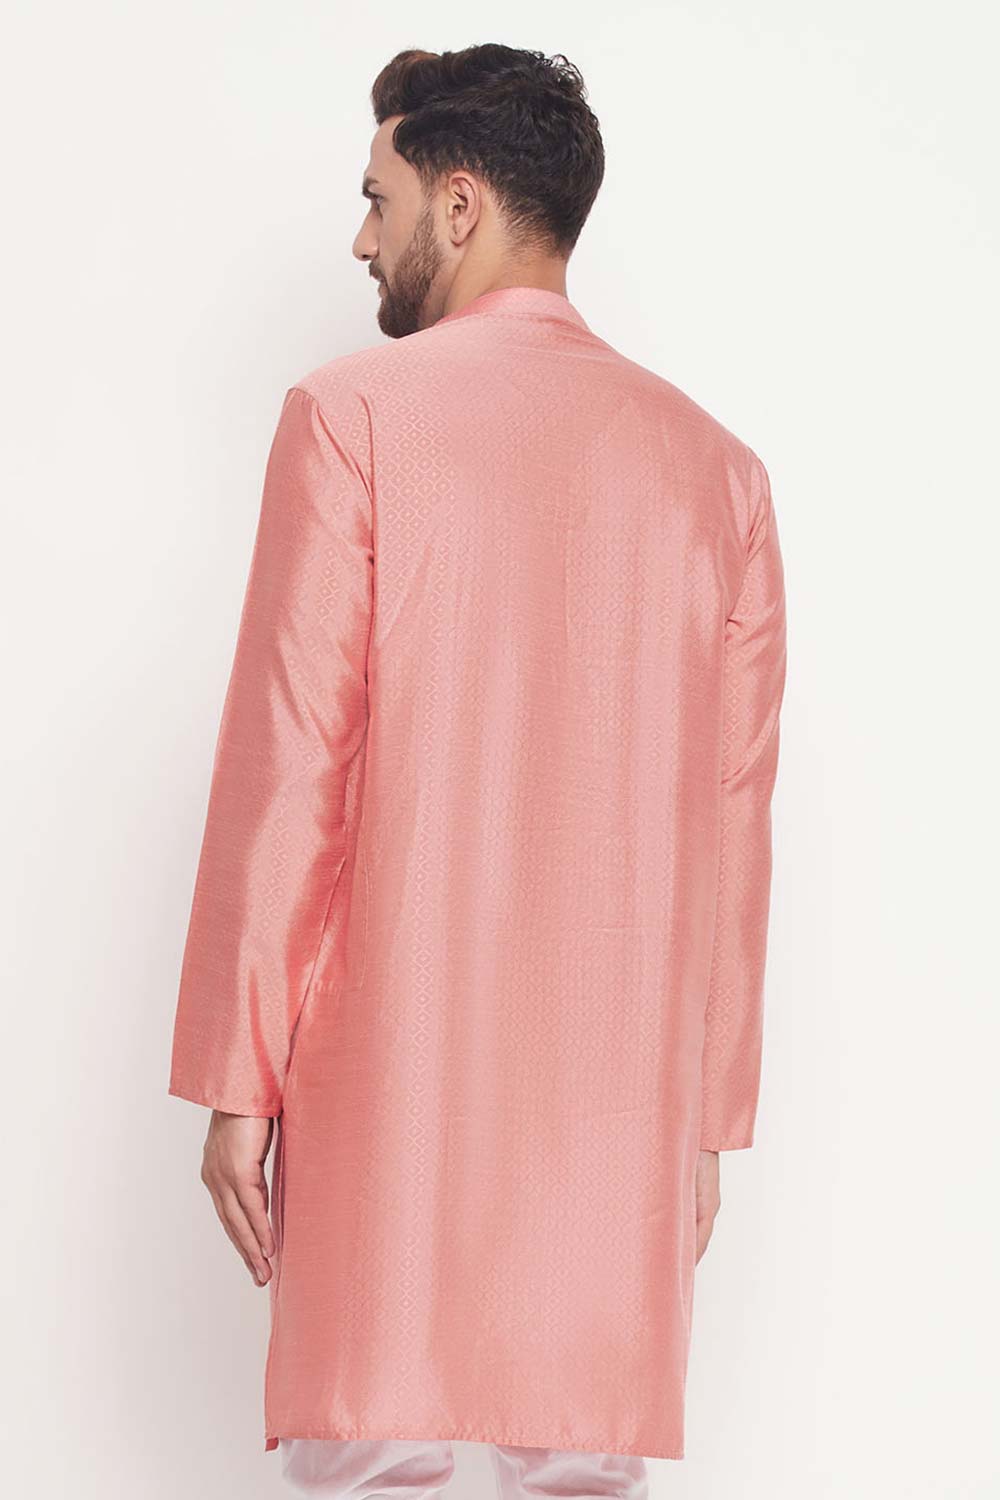 Buy Men's Pink Silk Blend Ethnic Motif Woven Design Short Kurta Online - Front